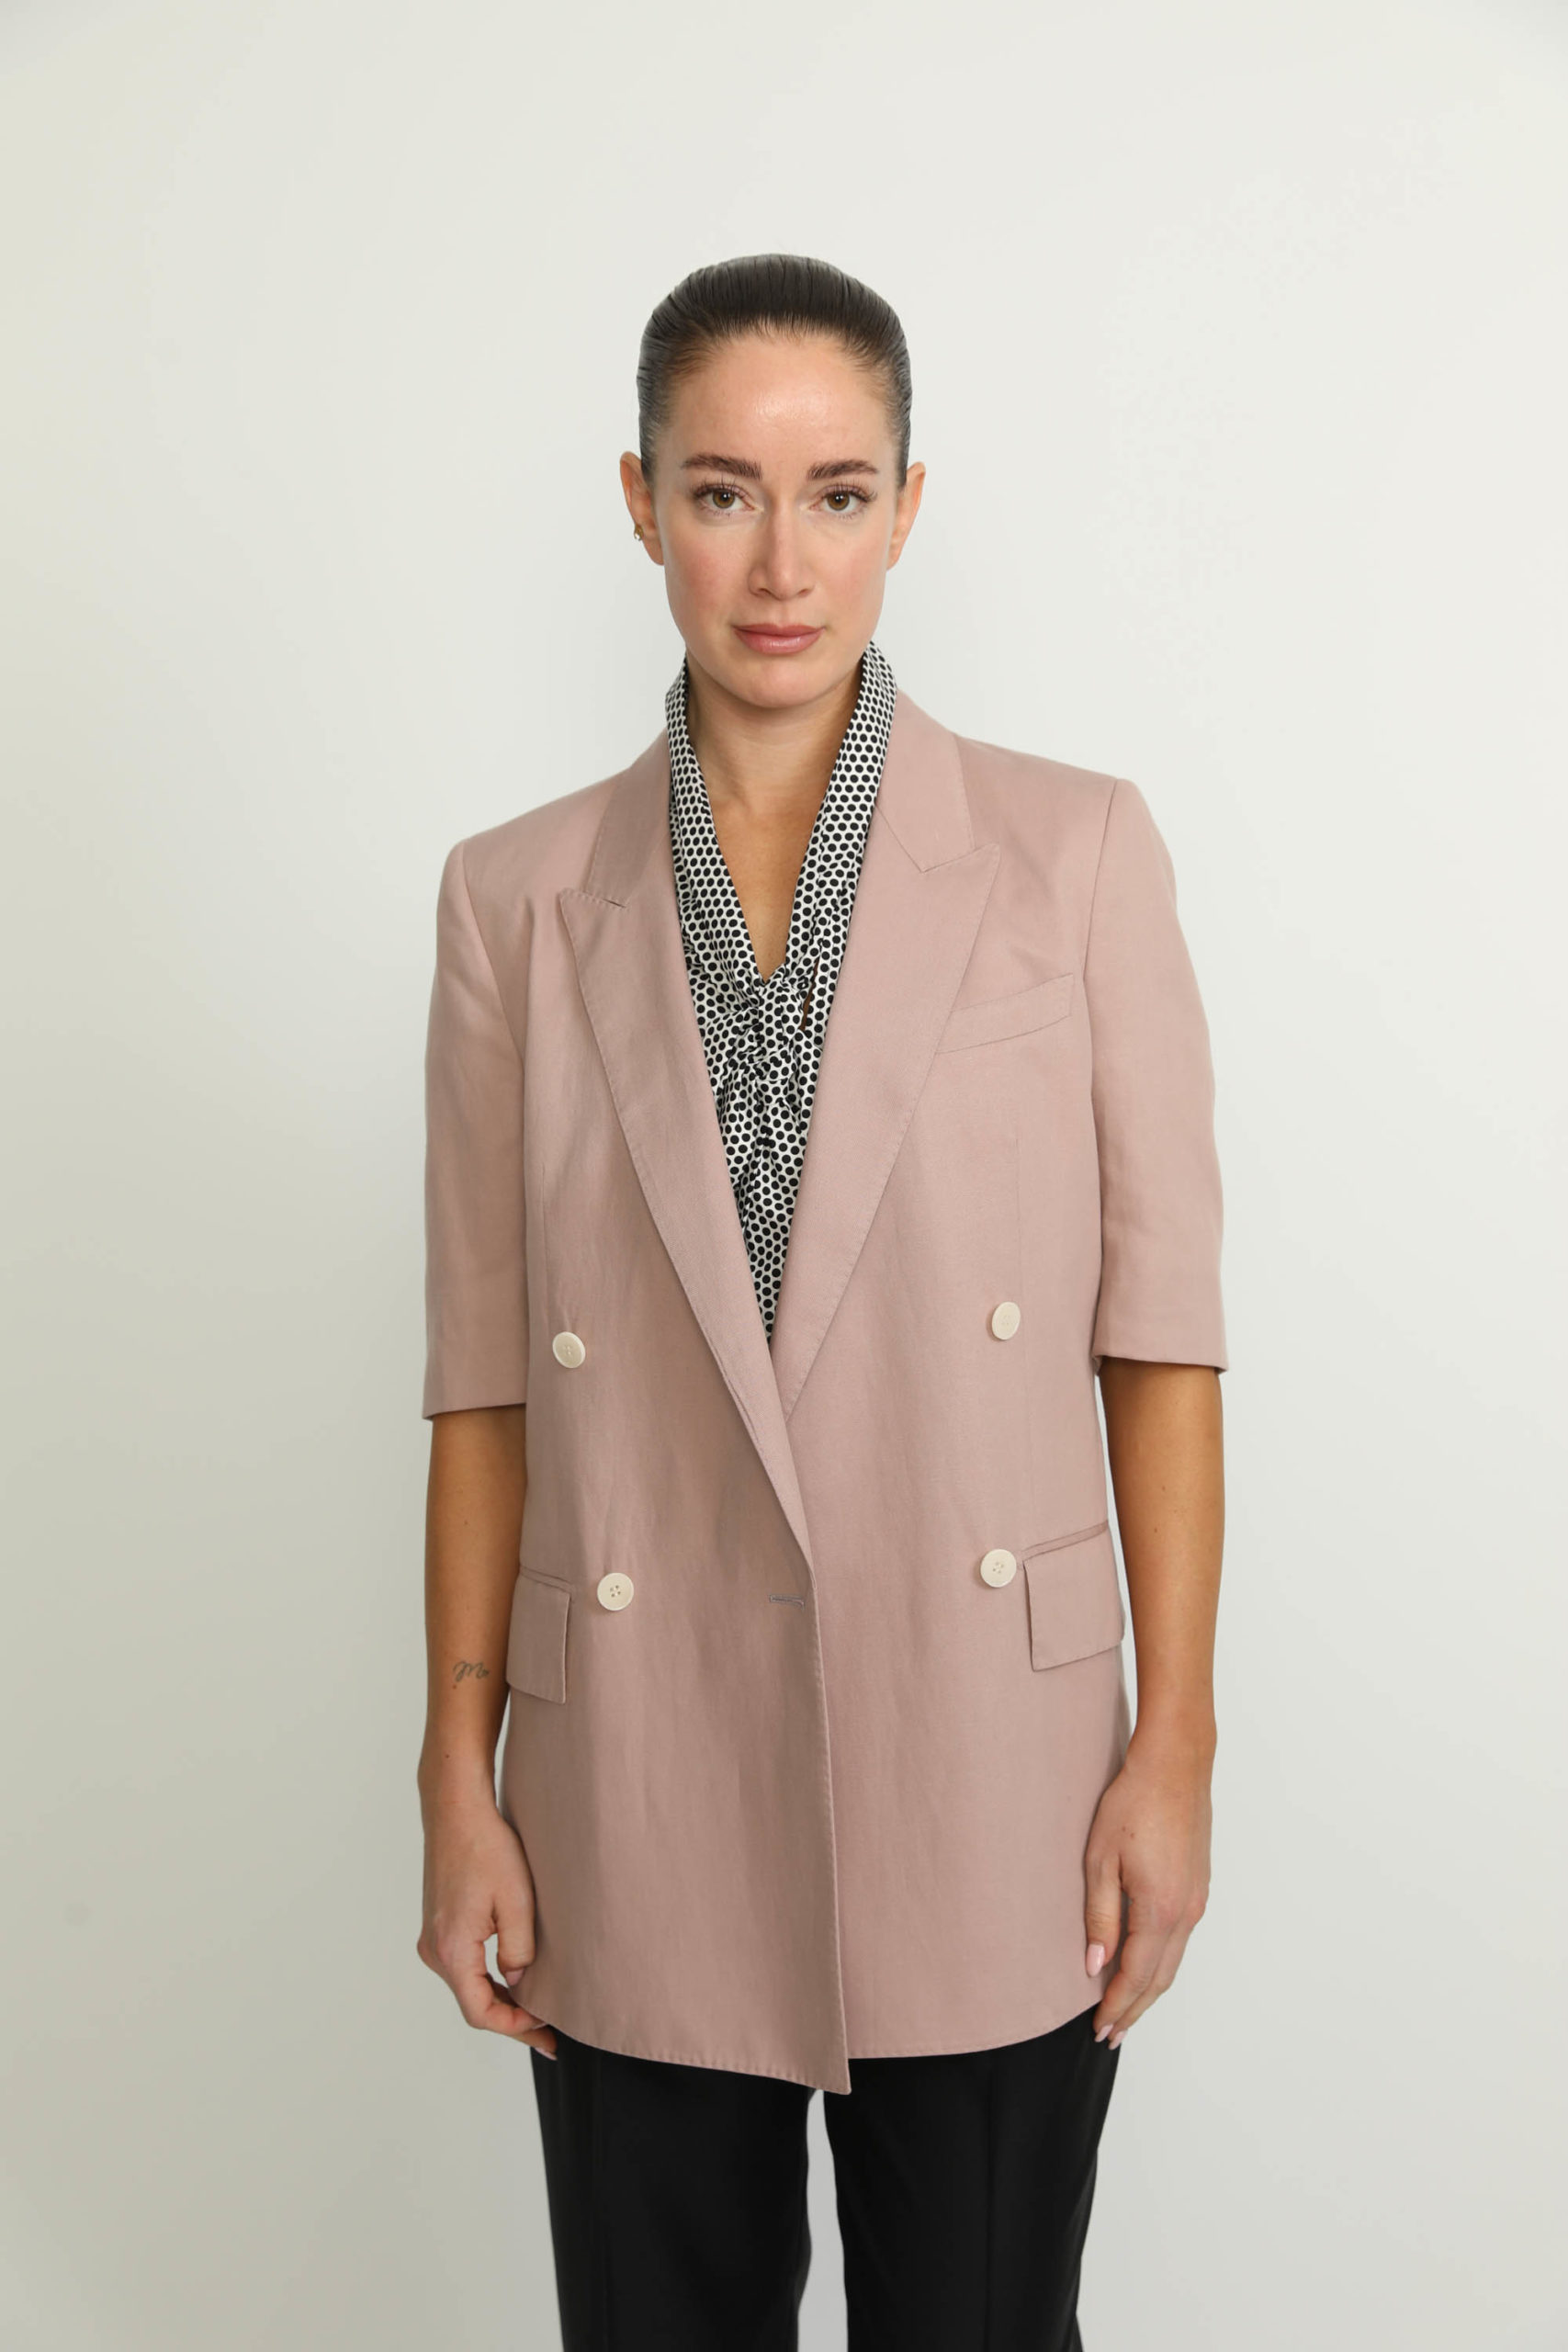 Bern Jacket – Bern Powder Pink Double Breasted Jacket